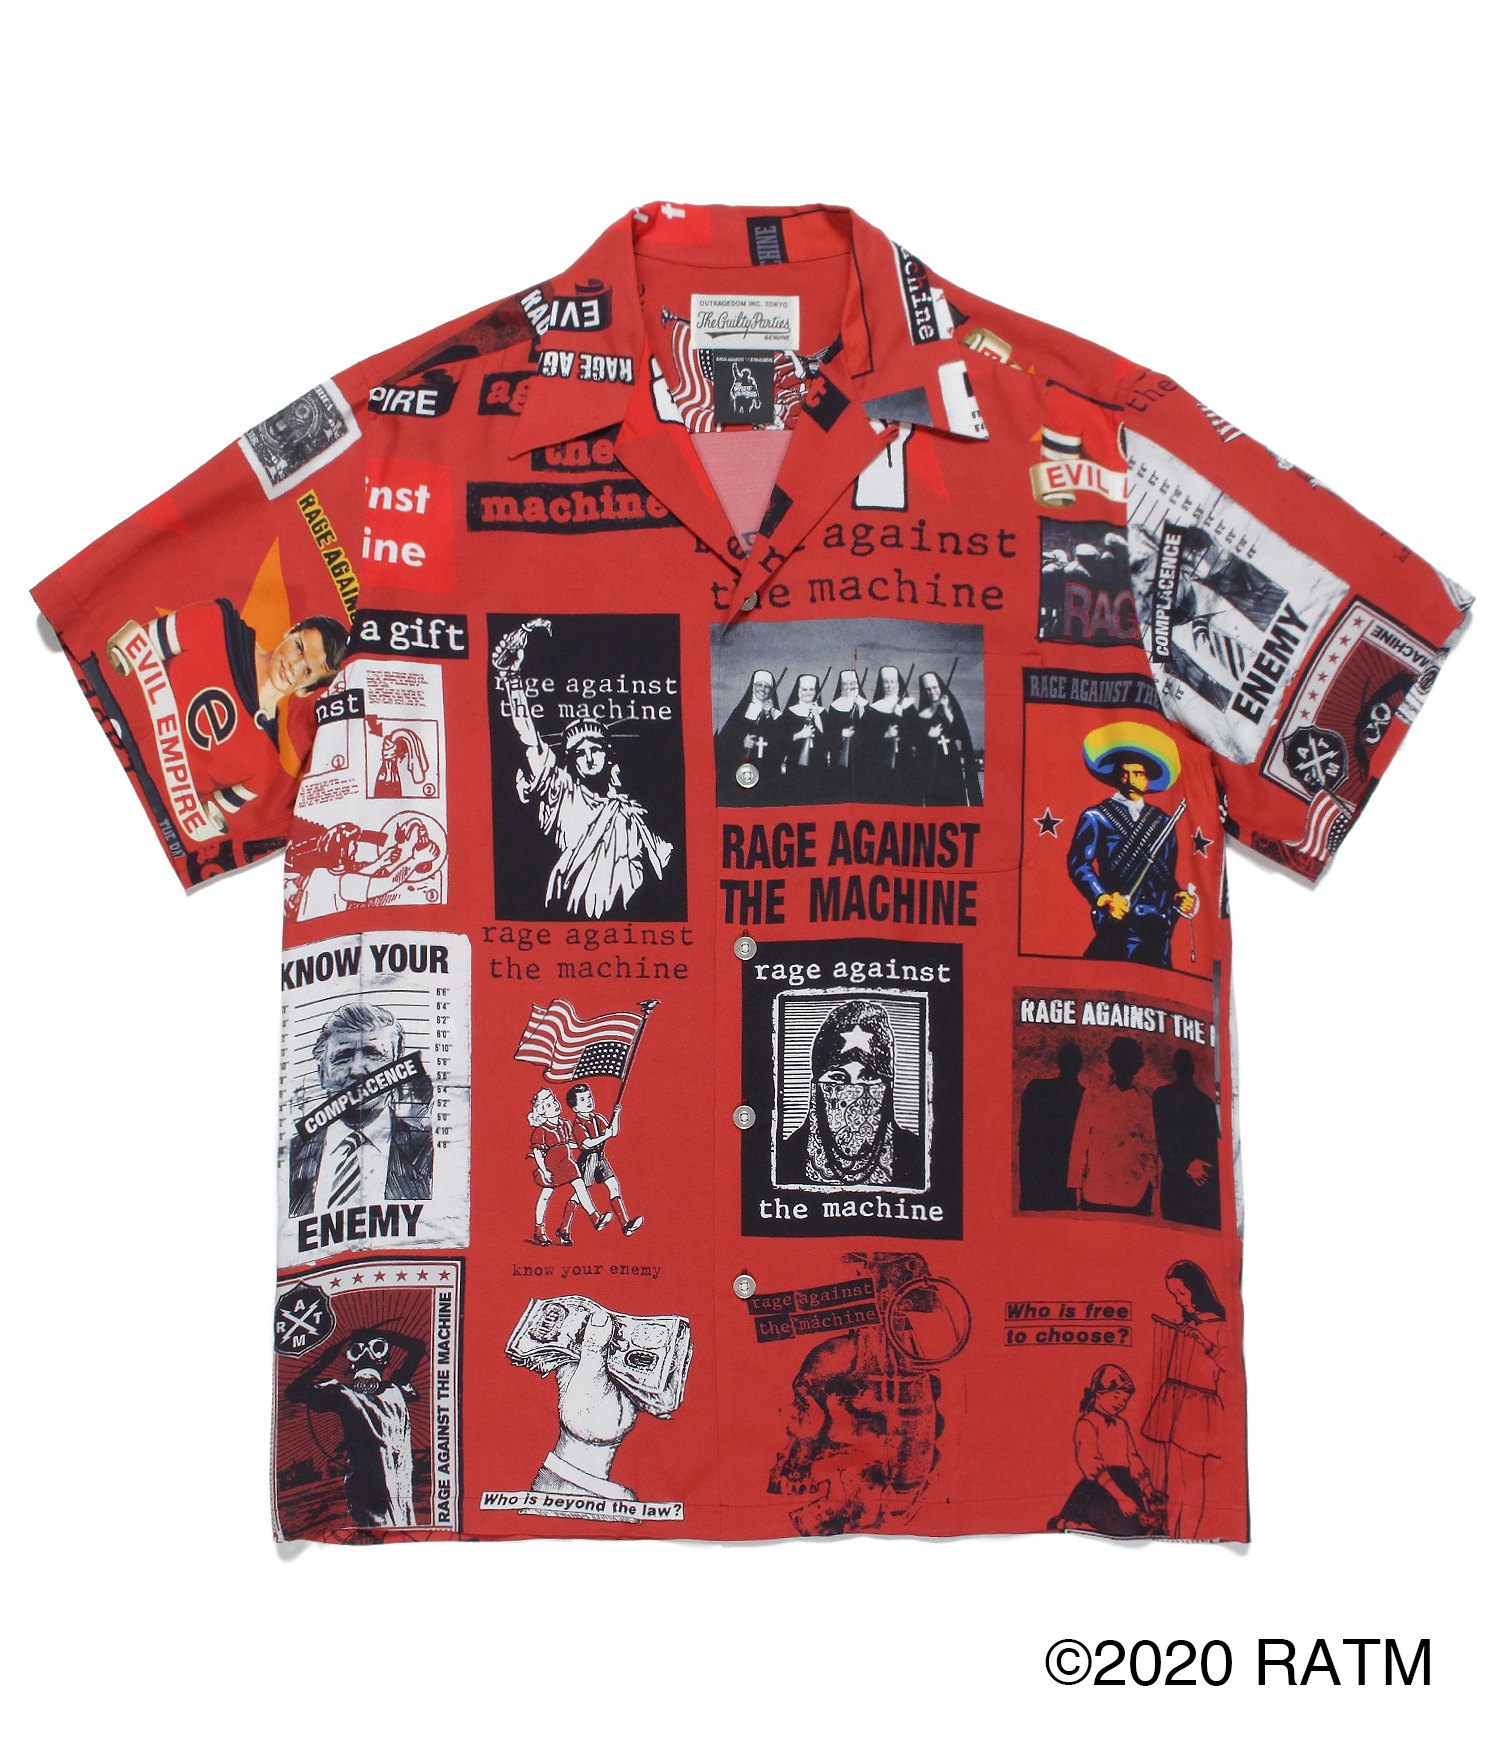 Rage Against the Machine turns the Hawaiian shirt into…